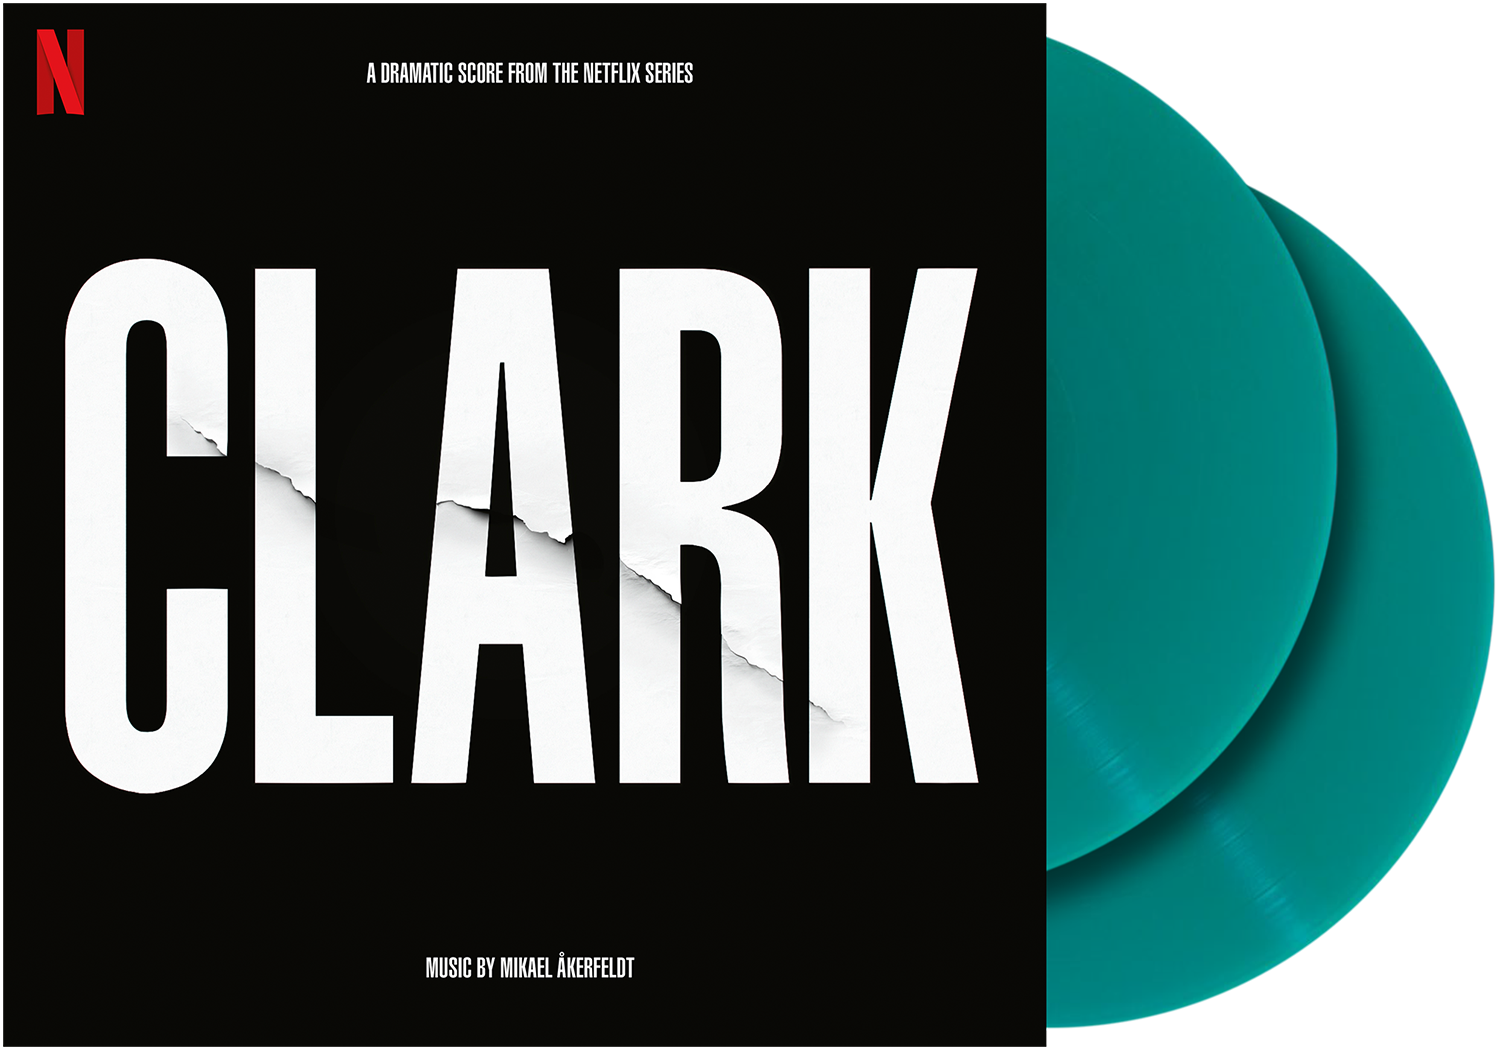 Mikael Akerfeldt - Clark (Soundtrack from the Netflix Series) - LP - farbig - EMP Exklusiv!